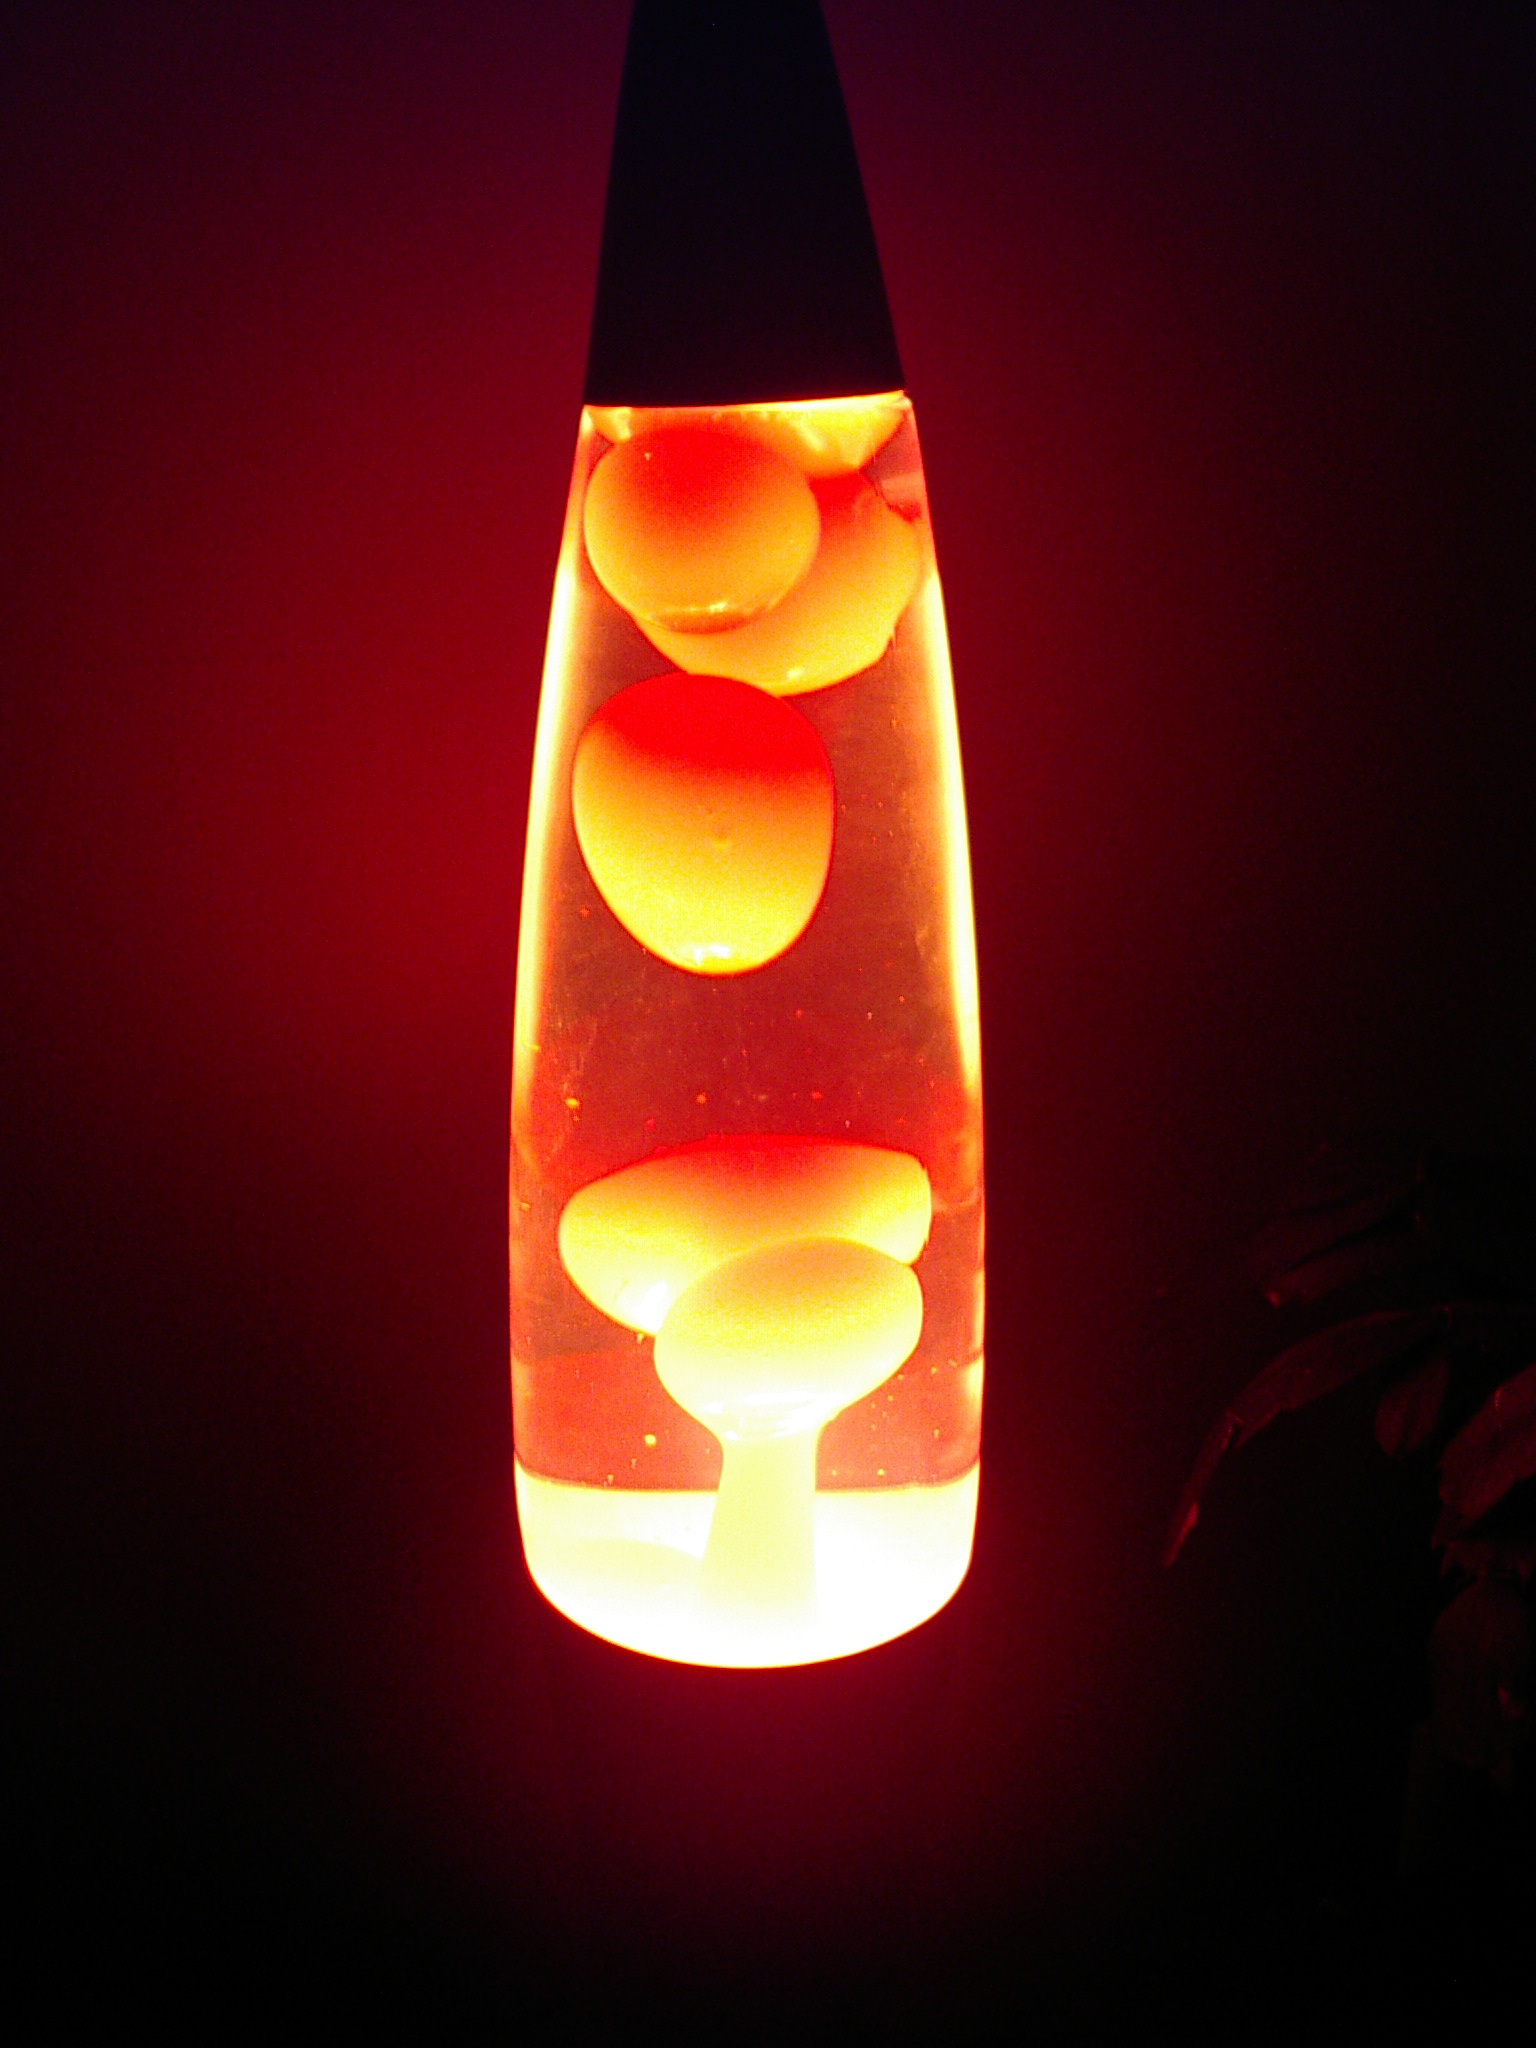 Lava - Wikimedia Commons